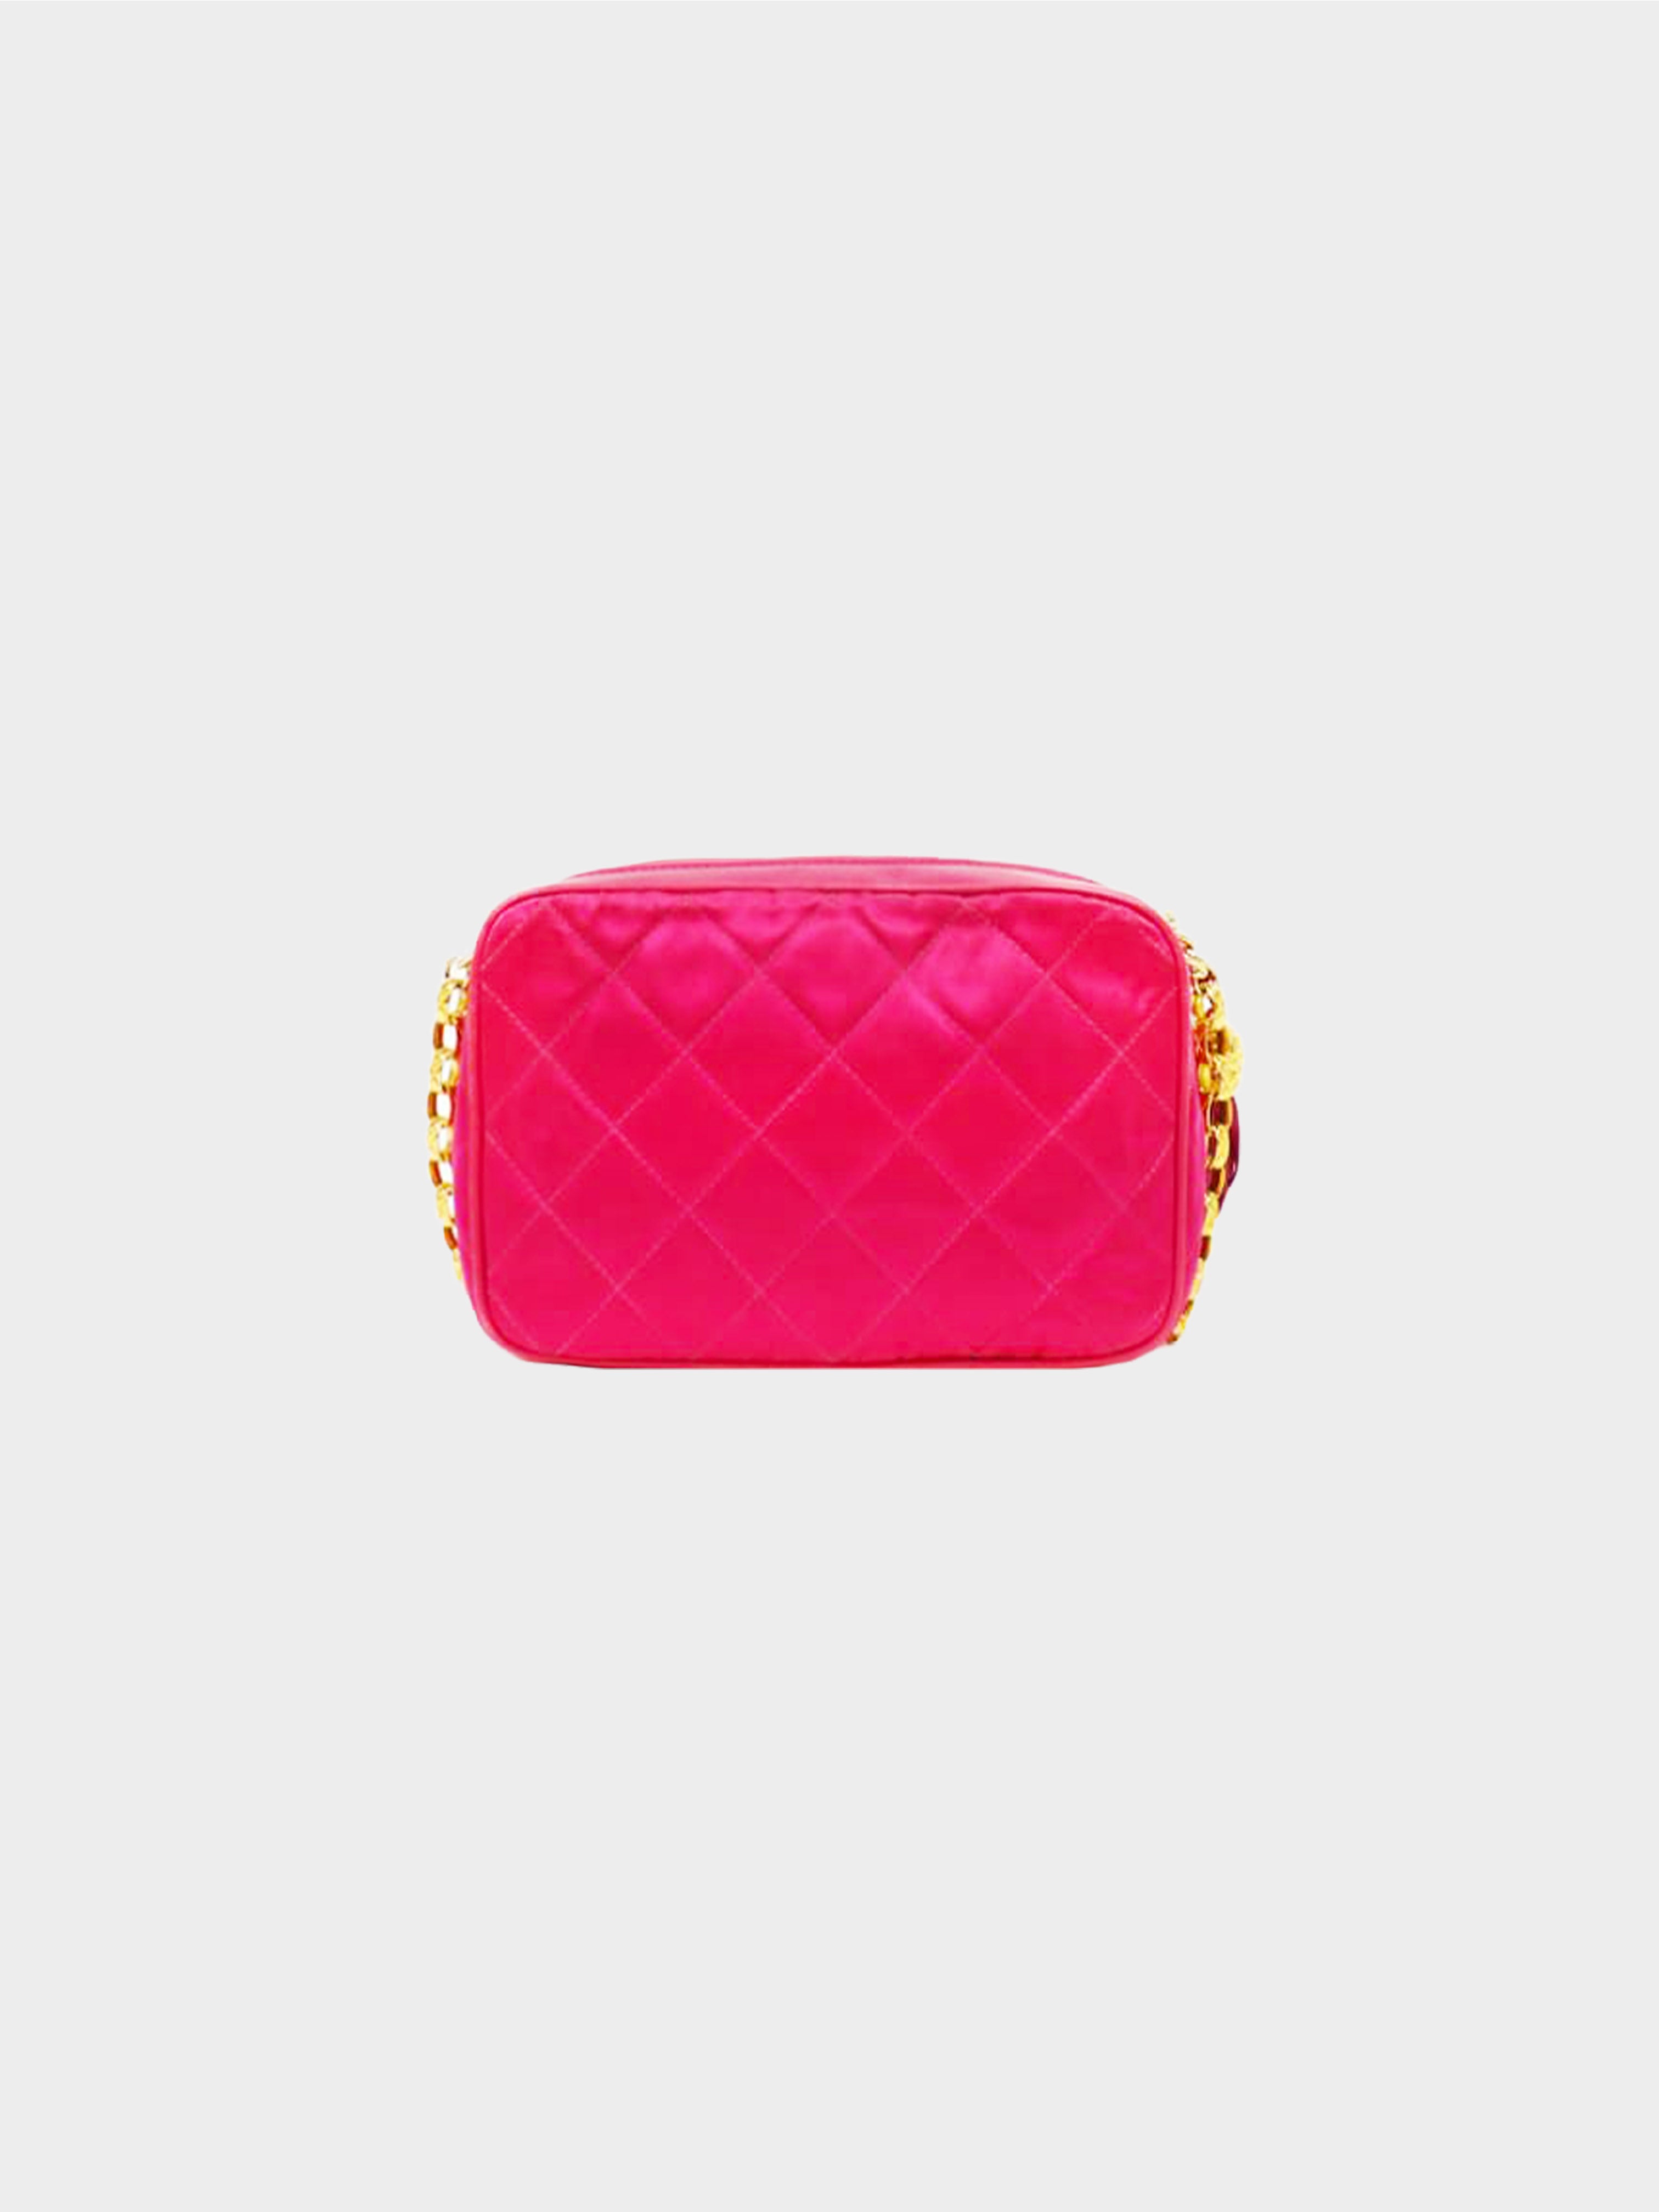 Chanel 1990-1991 Pink Satin Quilted Tassel Camera Bag